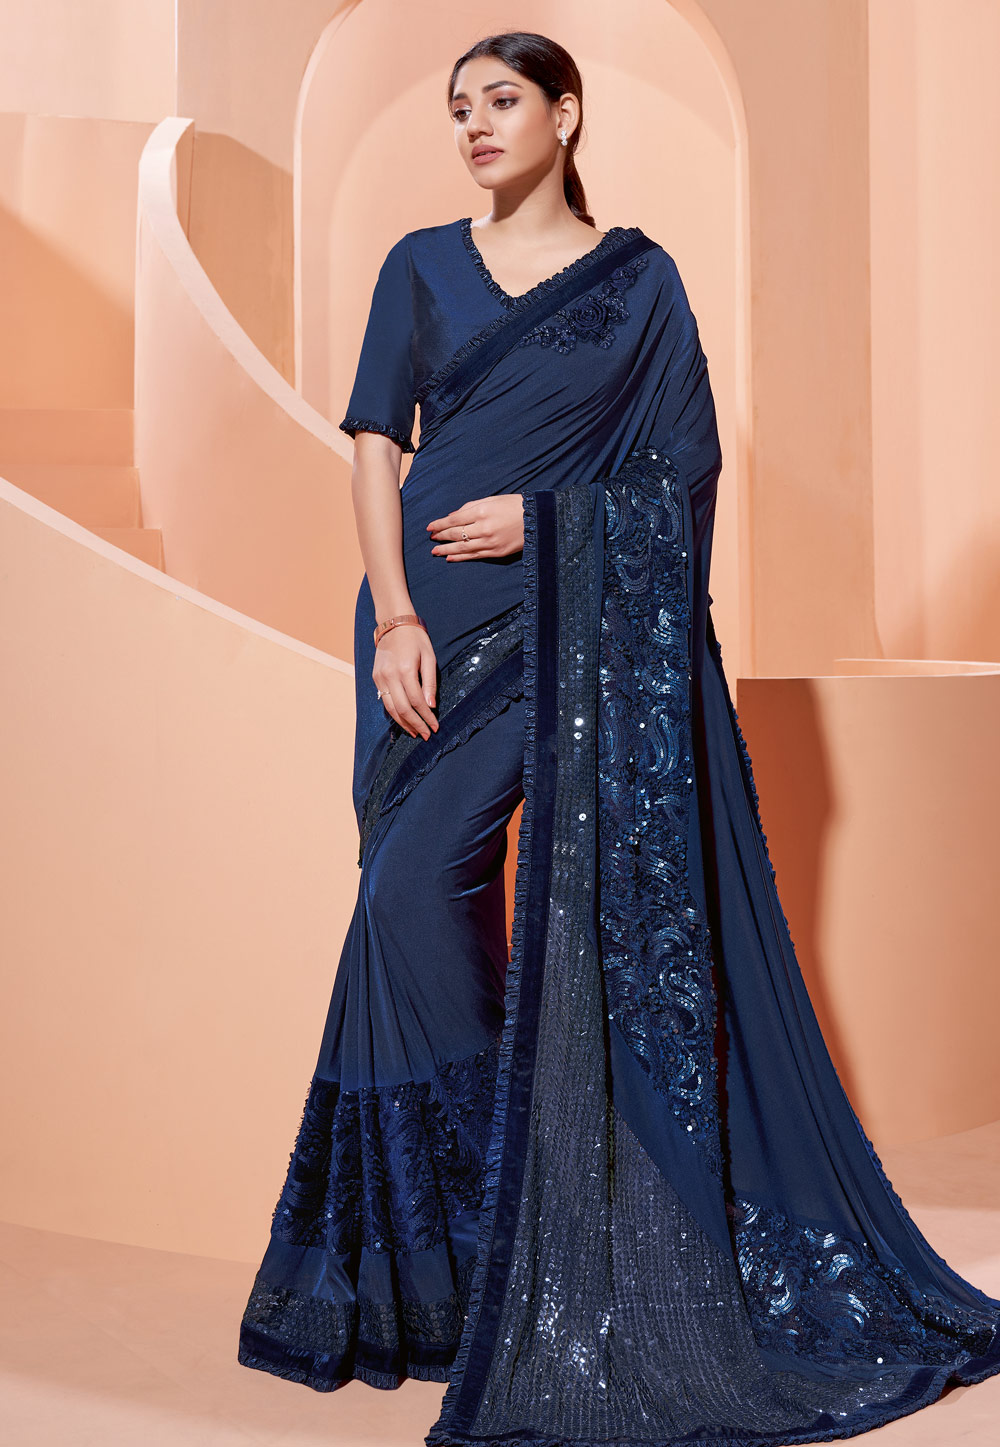 Blue lycra saree with blouse 41311